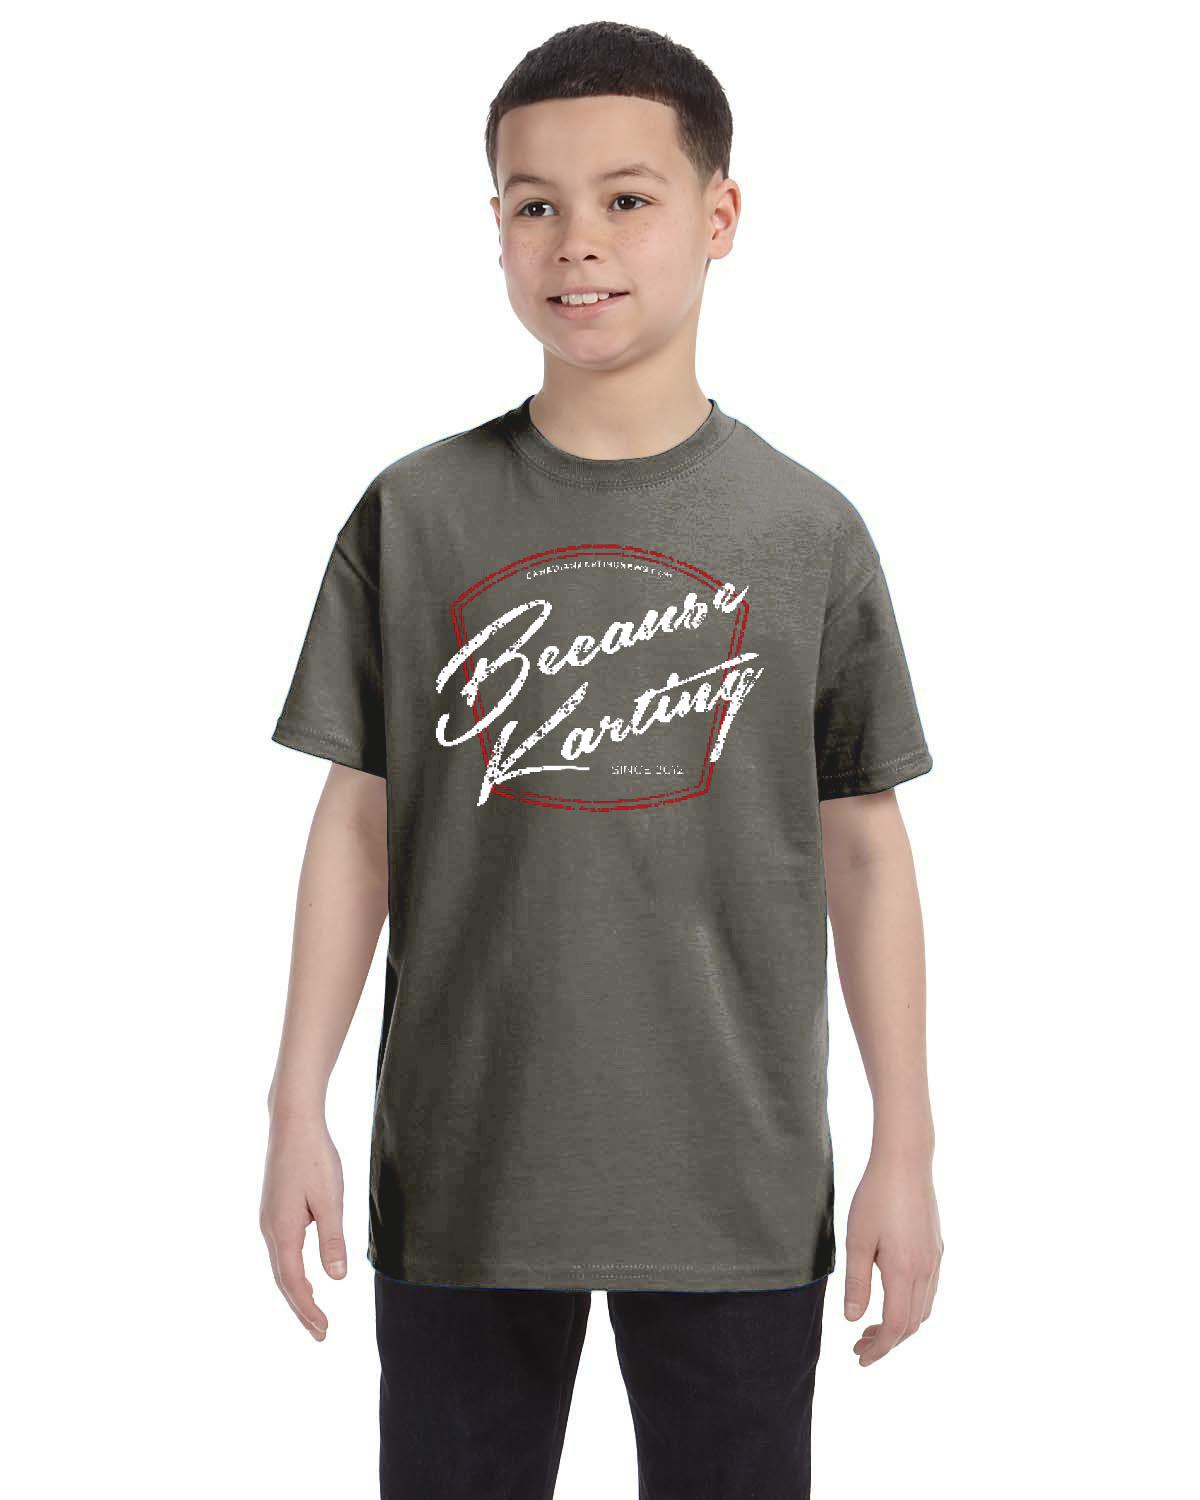 Canadian Karting News Kid's T-Shirt